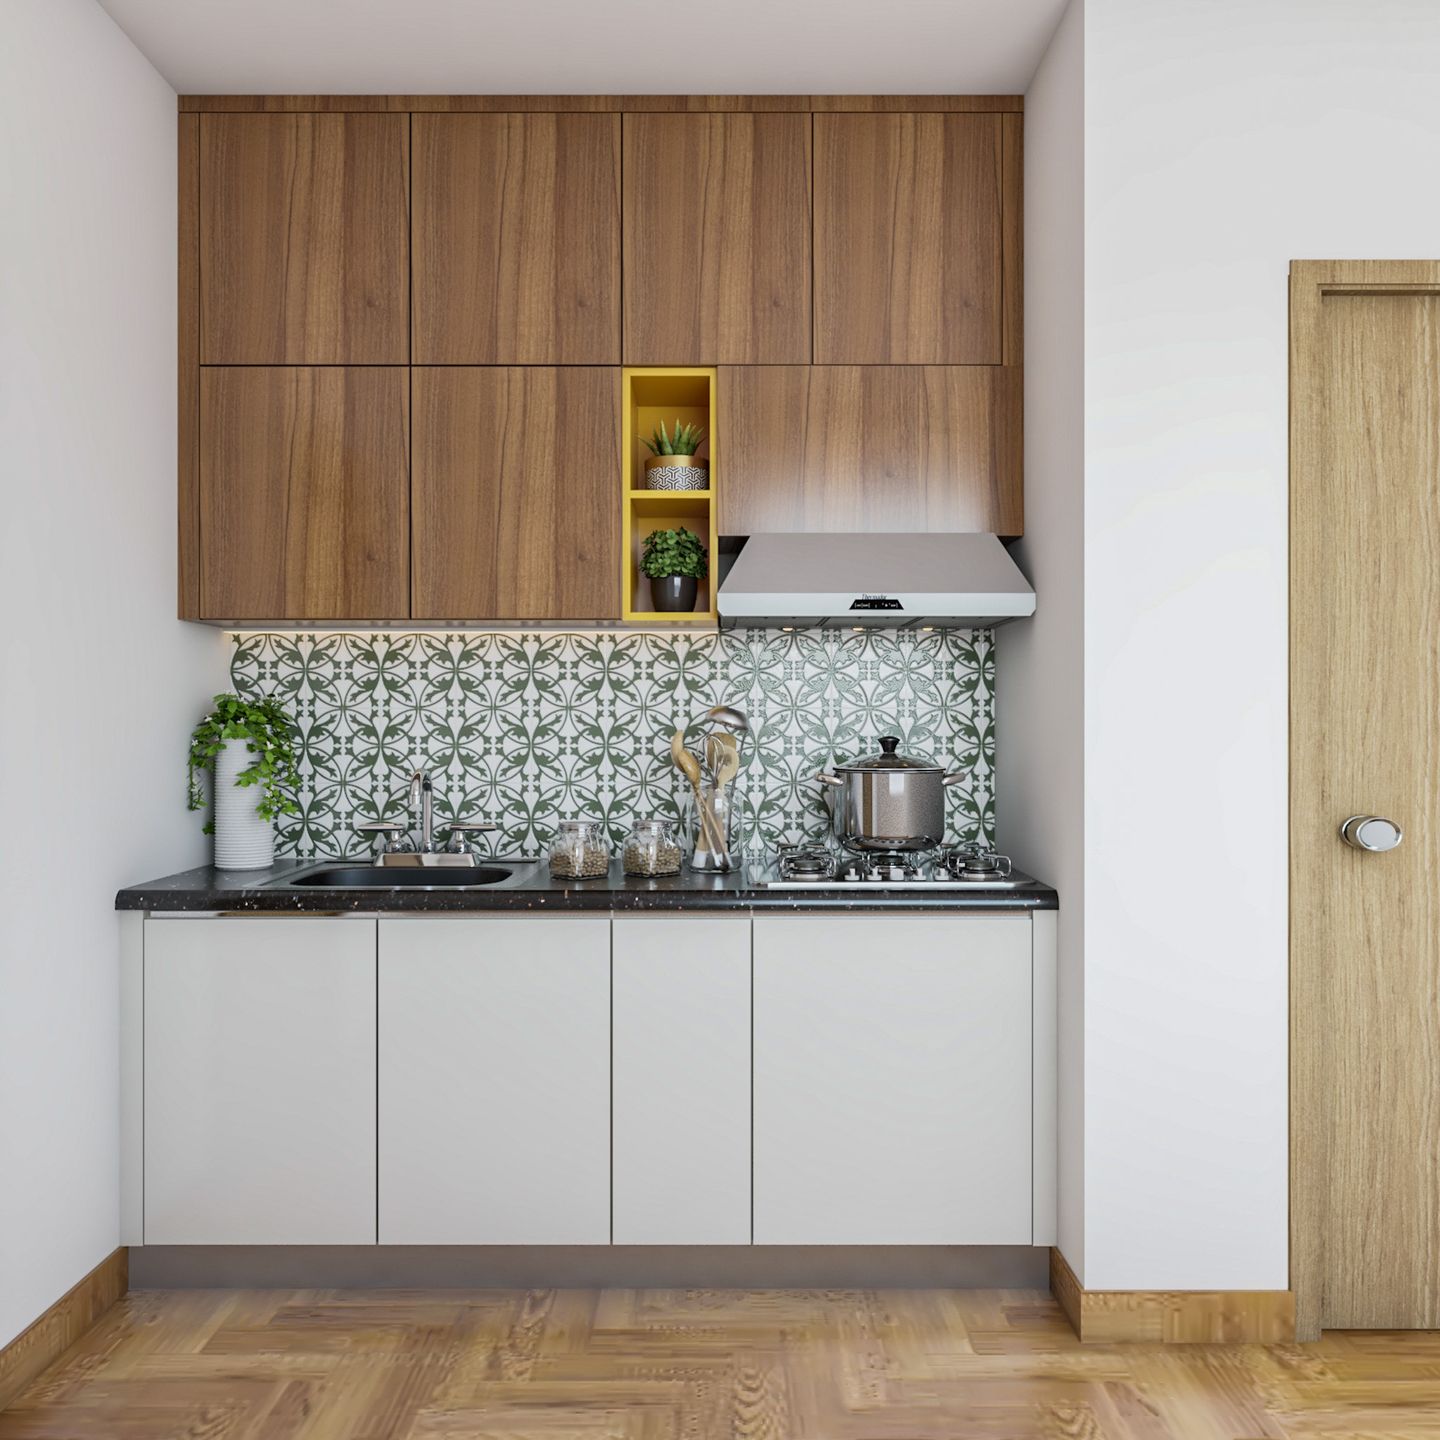 Ceramic White And Green Square Tile Design For Kitchen - Livspace